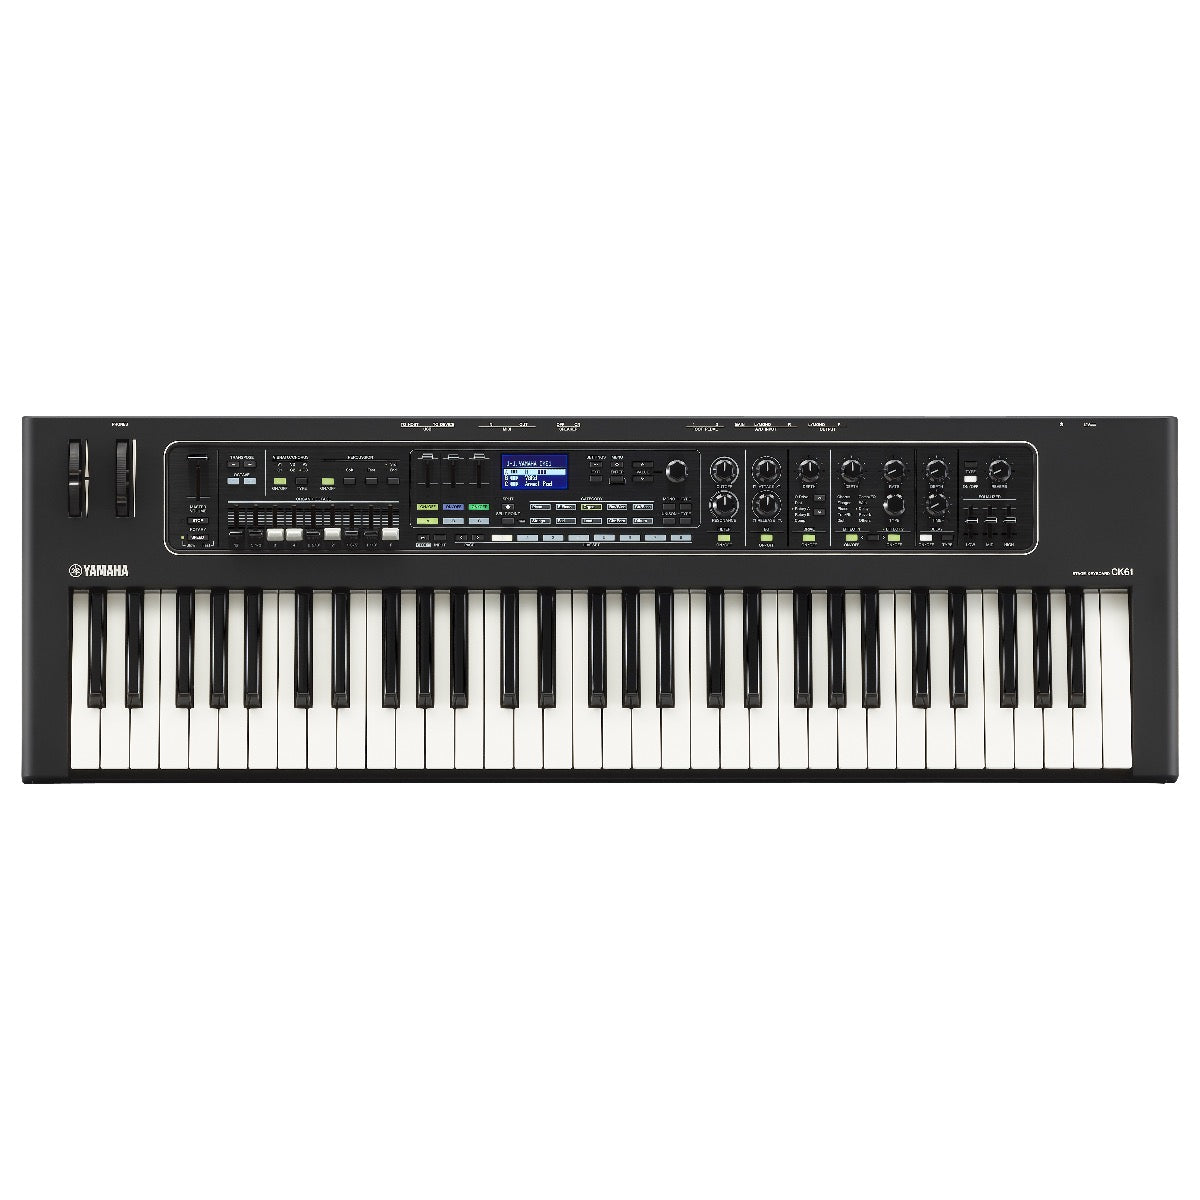 Yamaha CK61 Stage Keyboard - View 1